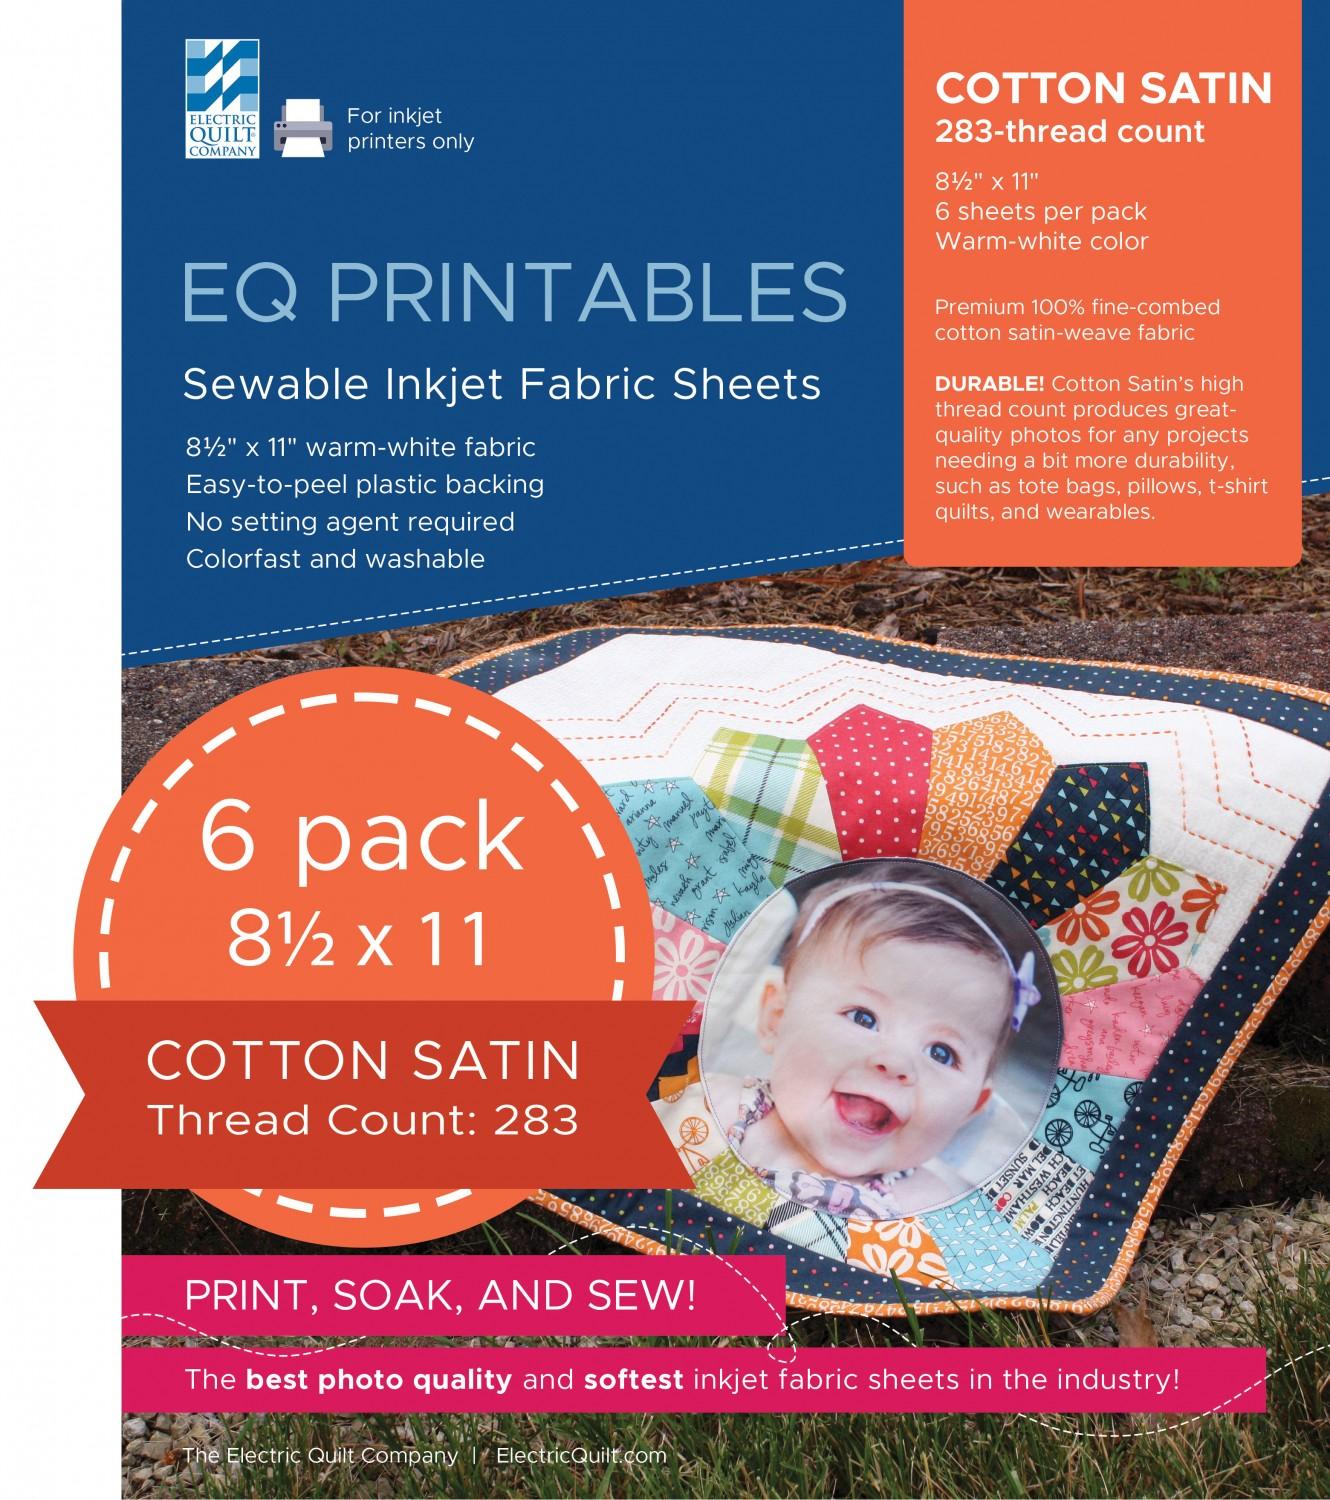 Premium Cotton Satin Inkjet Fabric Sheets P-CS811